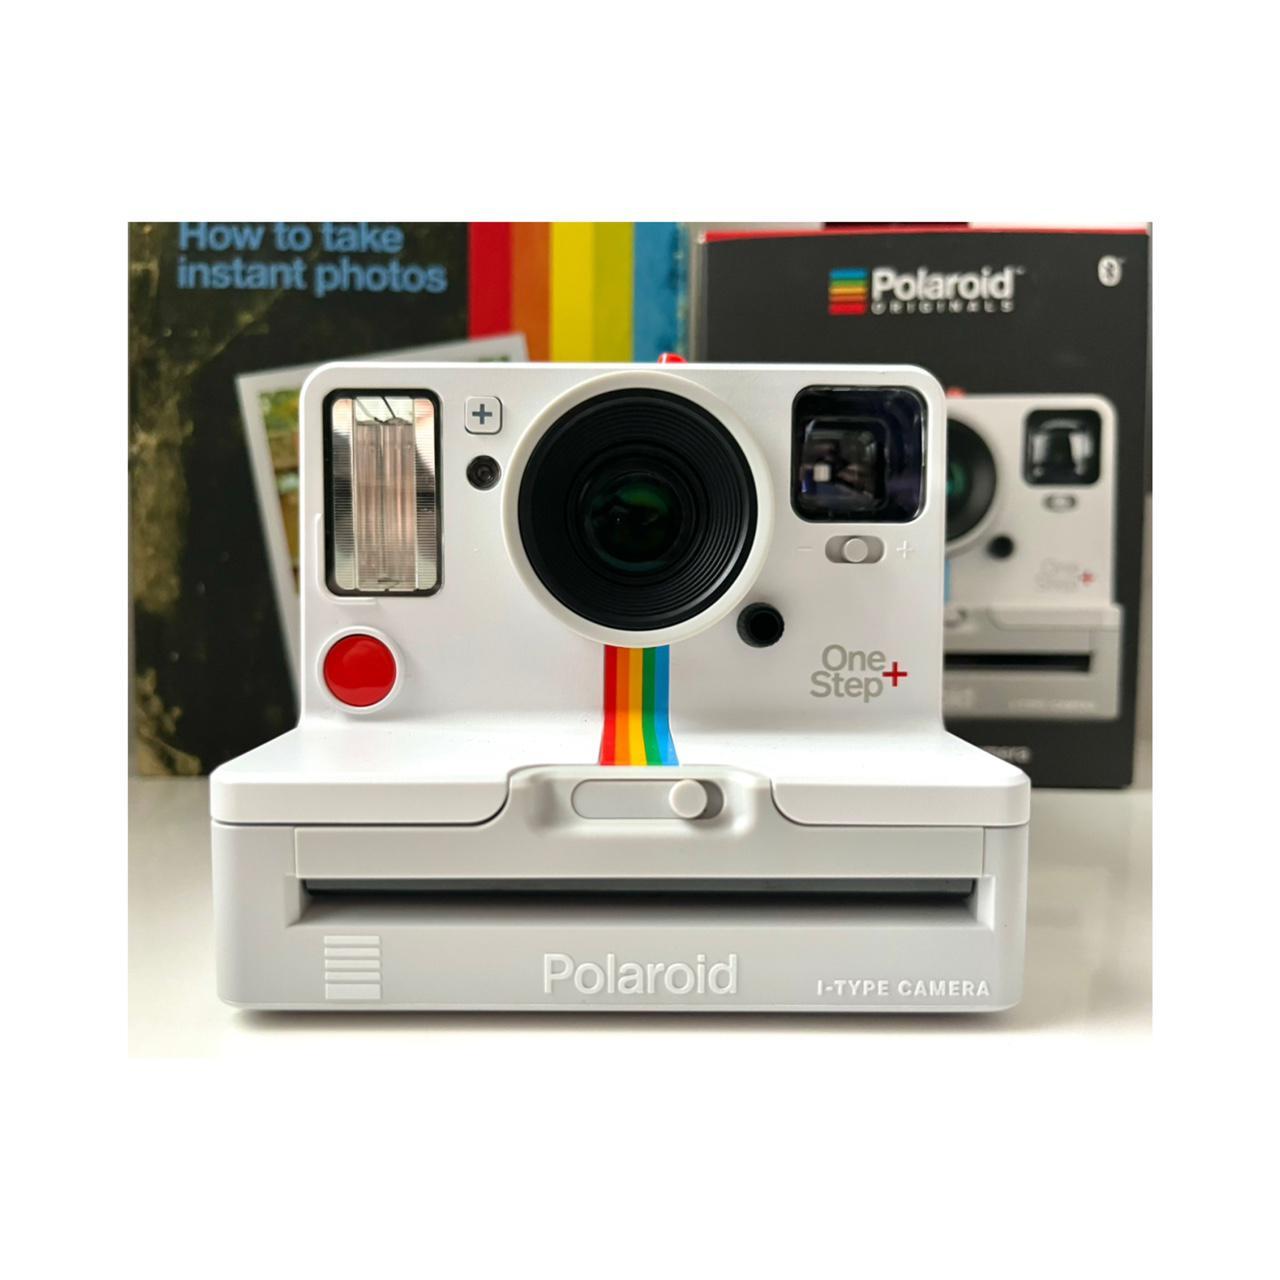 Product Image 1 - Polaroid Originals OneStep+ camera bundle.

Statement